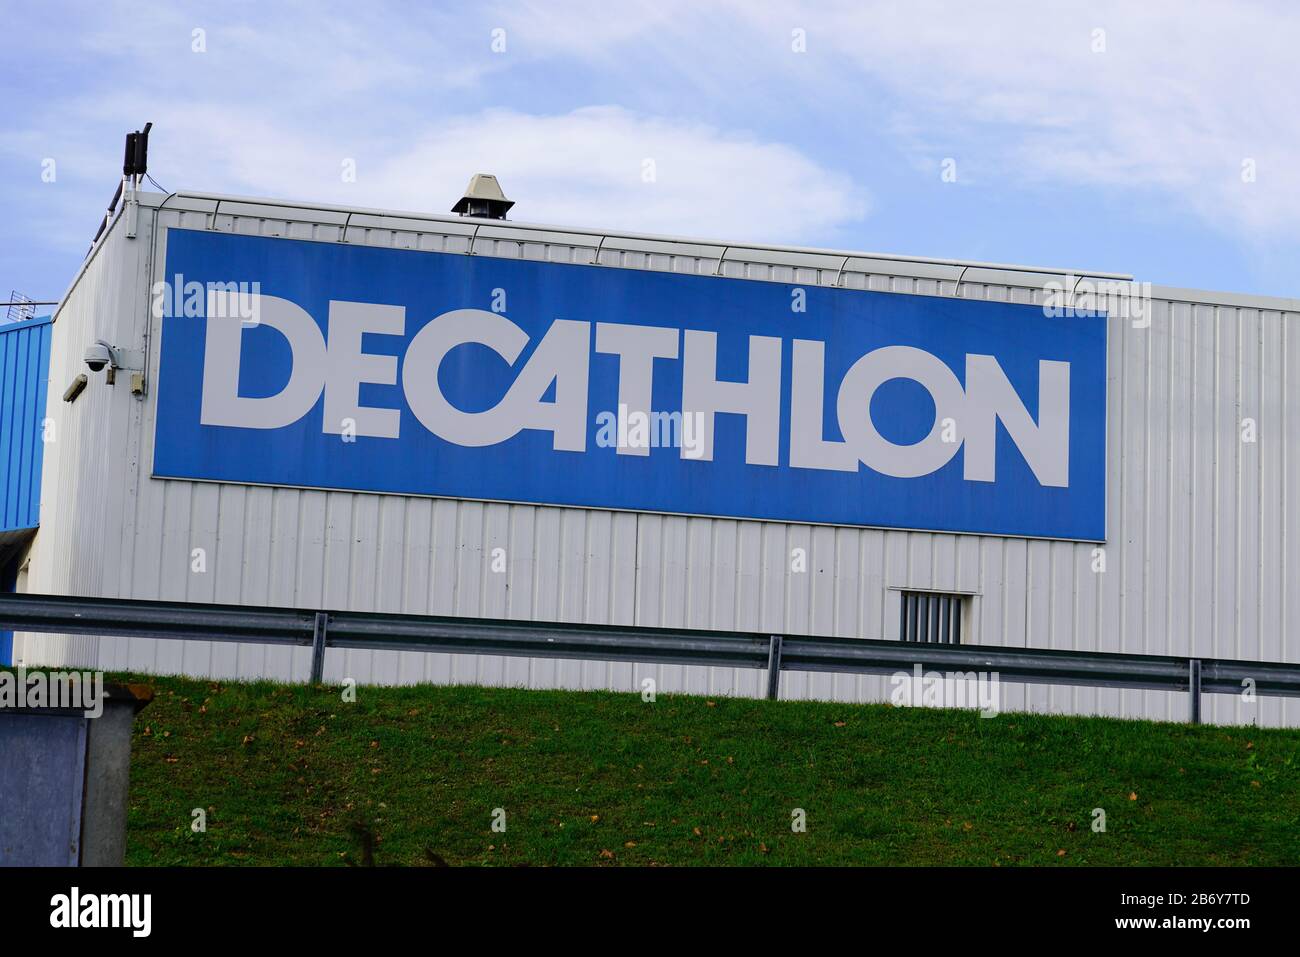 Bordeaux , Aquitaine / France - 10 27 2019 : decathlon sign store logo in shop building Stock Photo